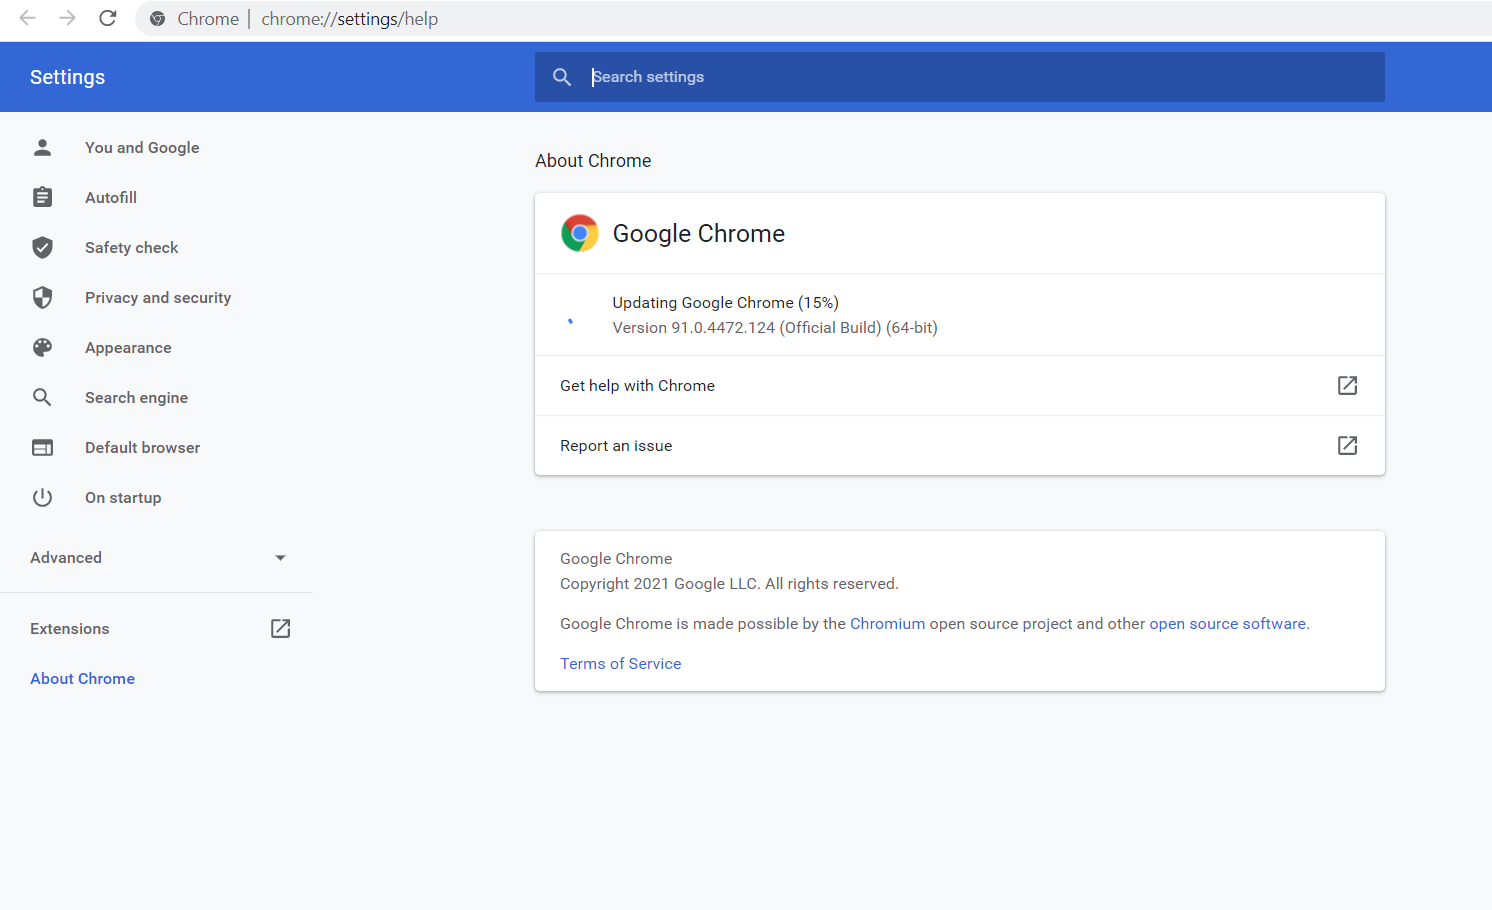 Google Chrome Update-91